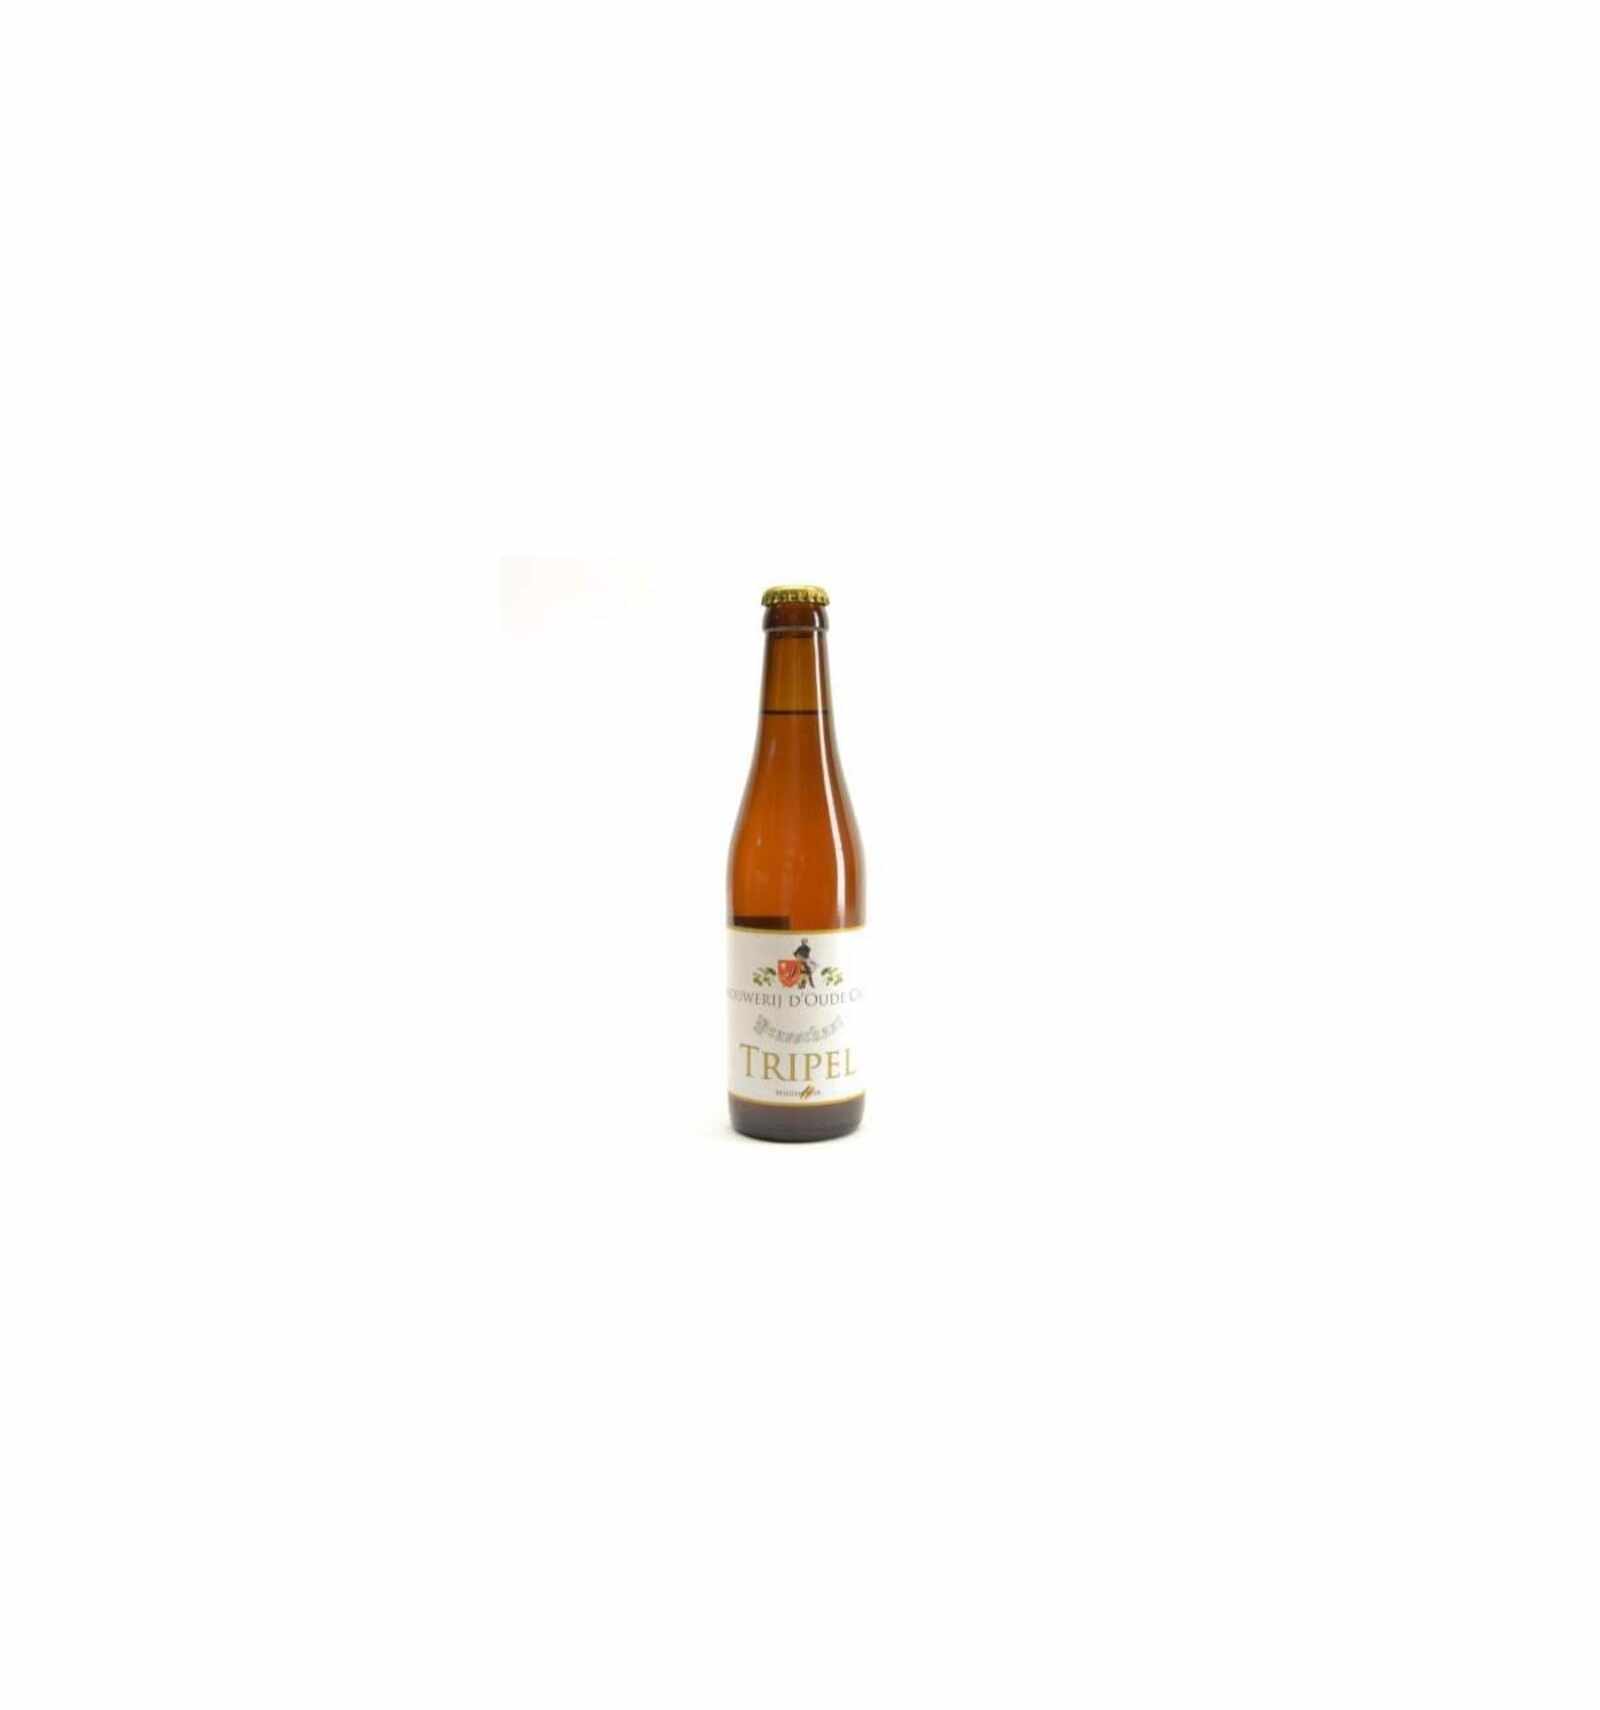 Bere bruna Brouwerij Oude Caert, 8% alc., 0.33L, Belgia